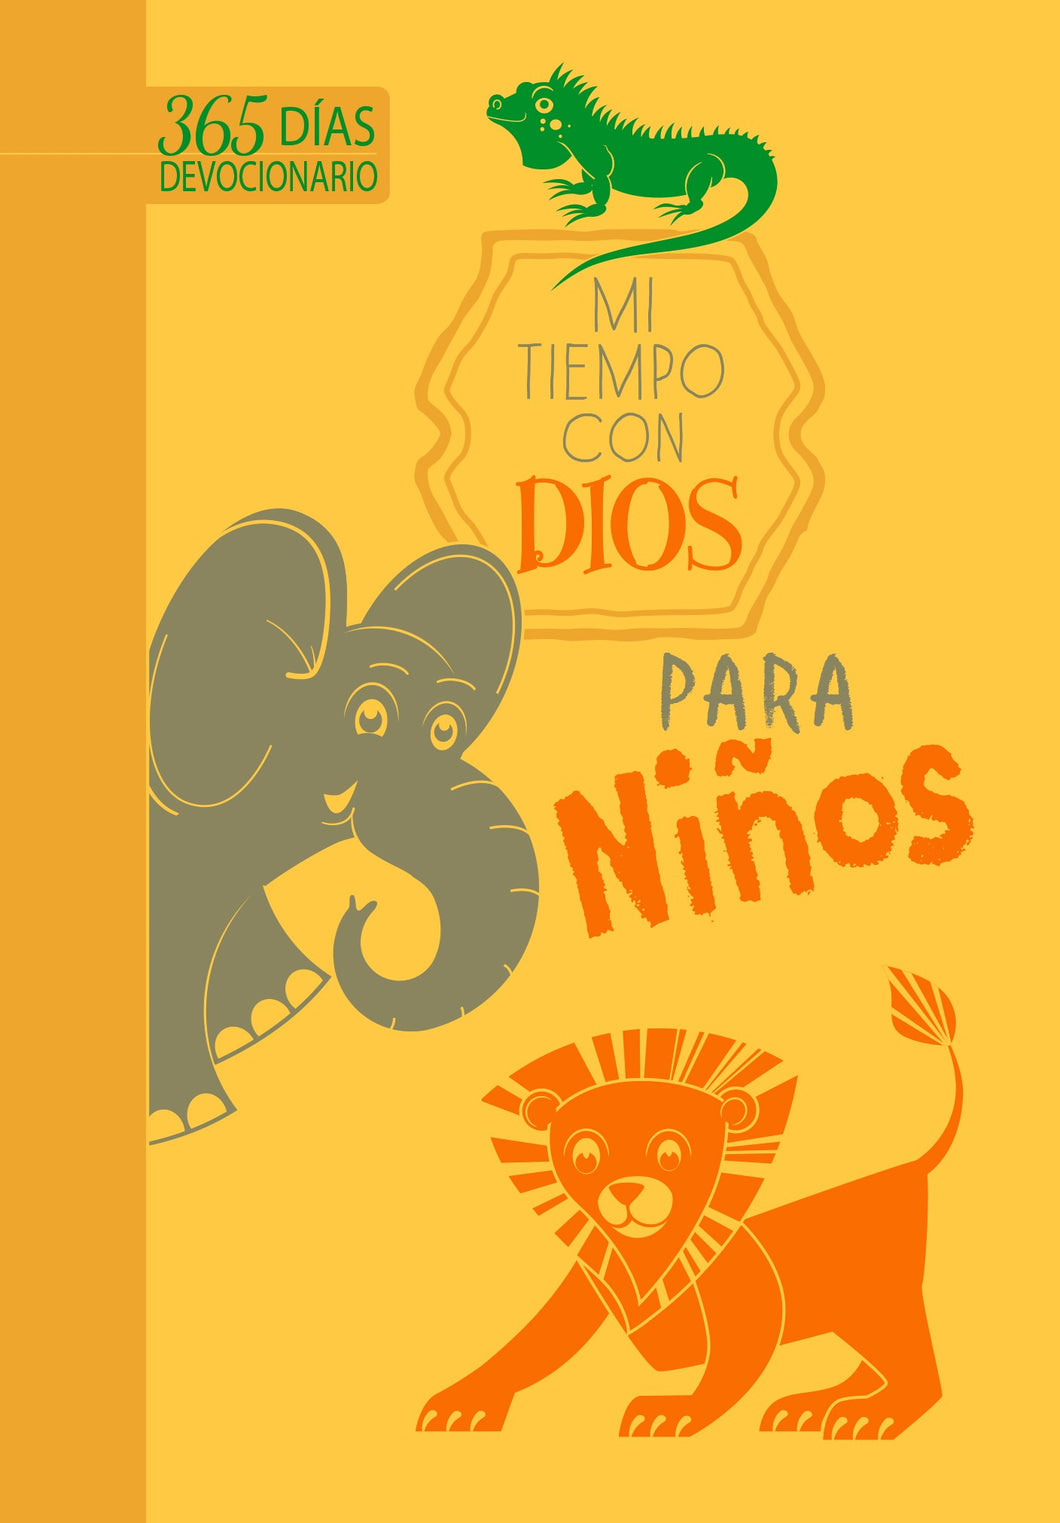 Spanish-A Little God Time For Kids (Mi Tiempo Con Dios Para Ninos